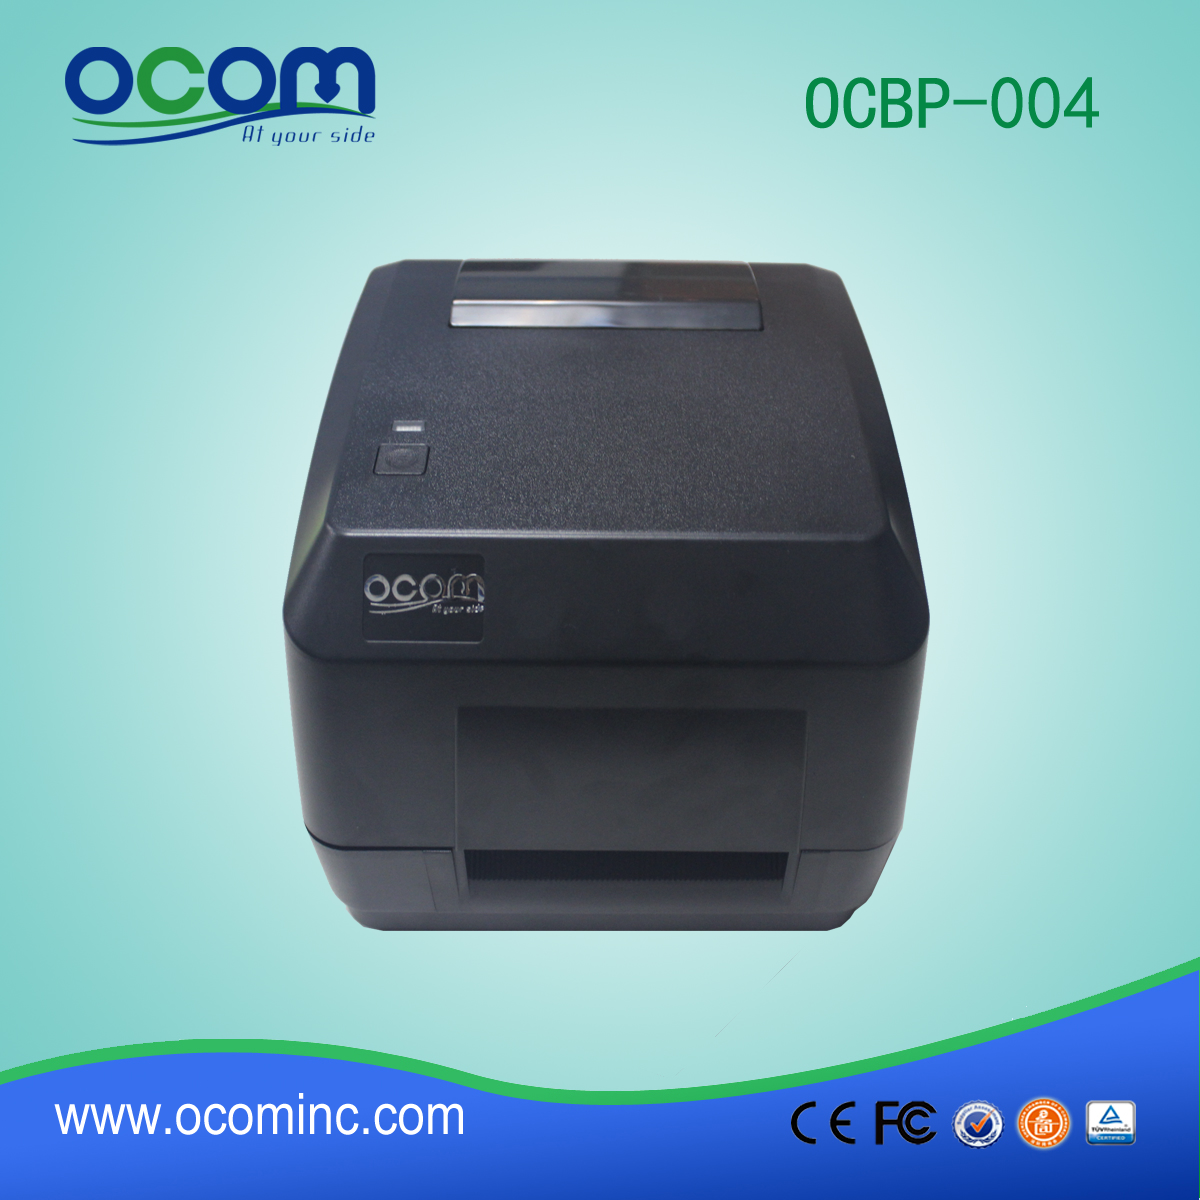 OCBP-004) Κίνα εργοστάσιο γίνεται μεταφορά θερμότητας μηχάνημα εκτύπωσης χαρτιού